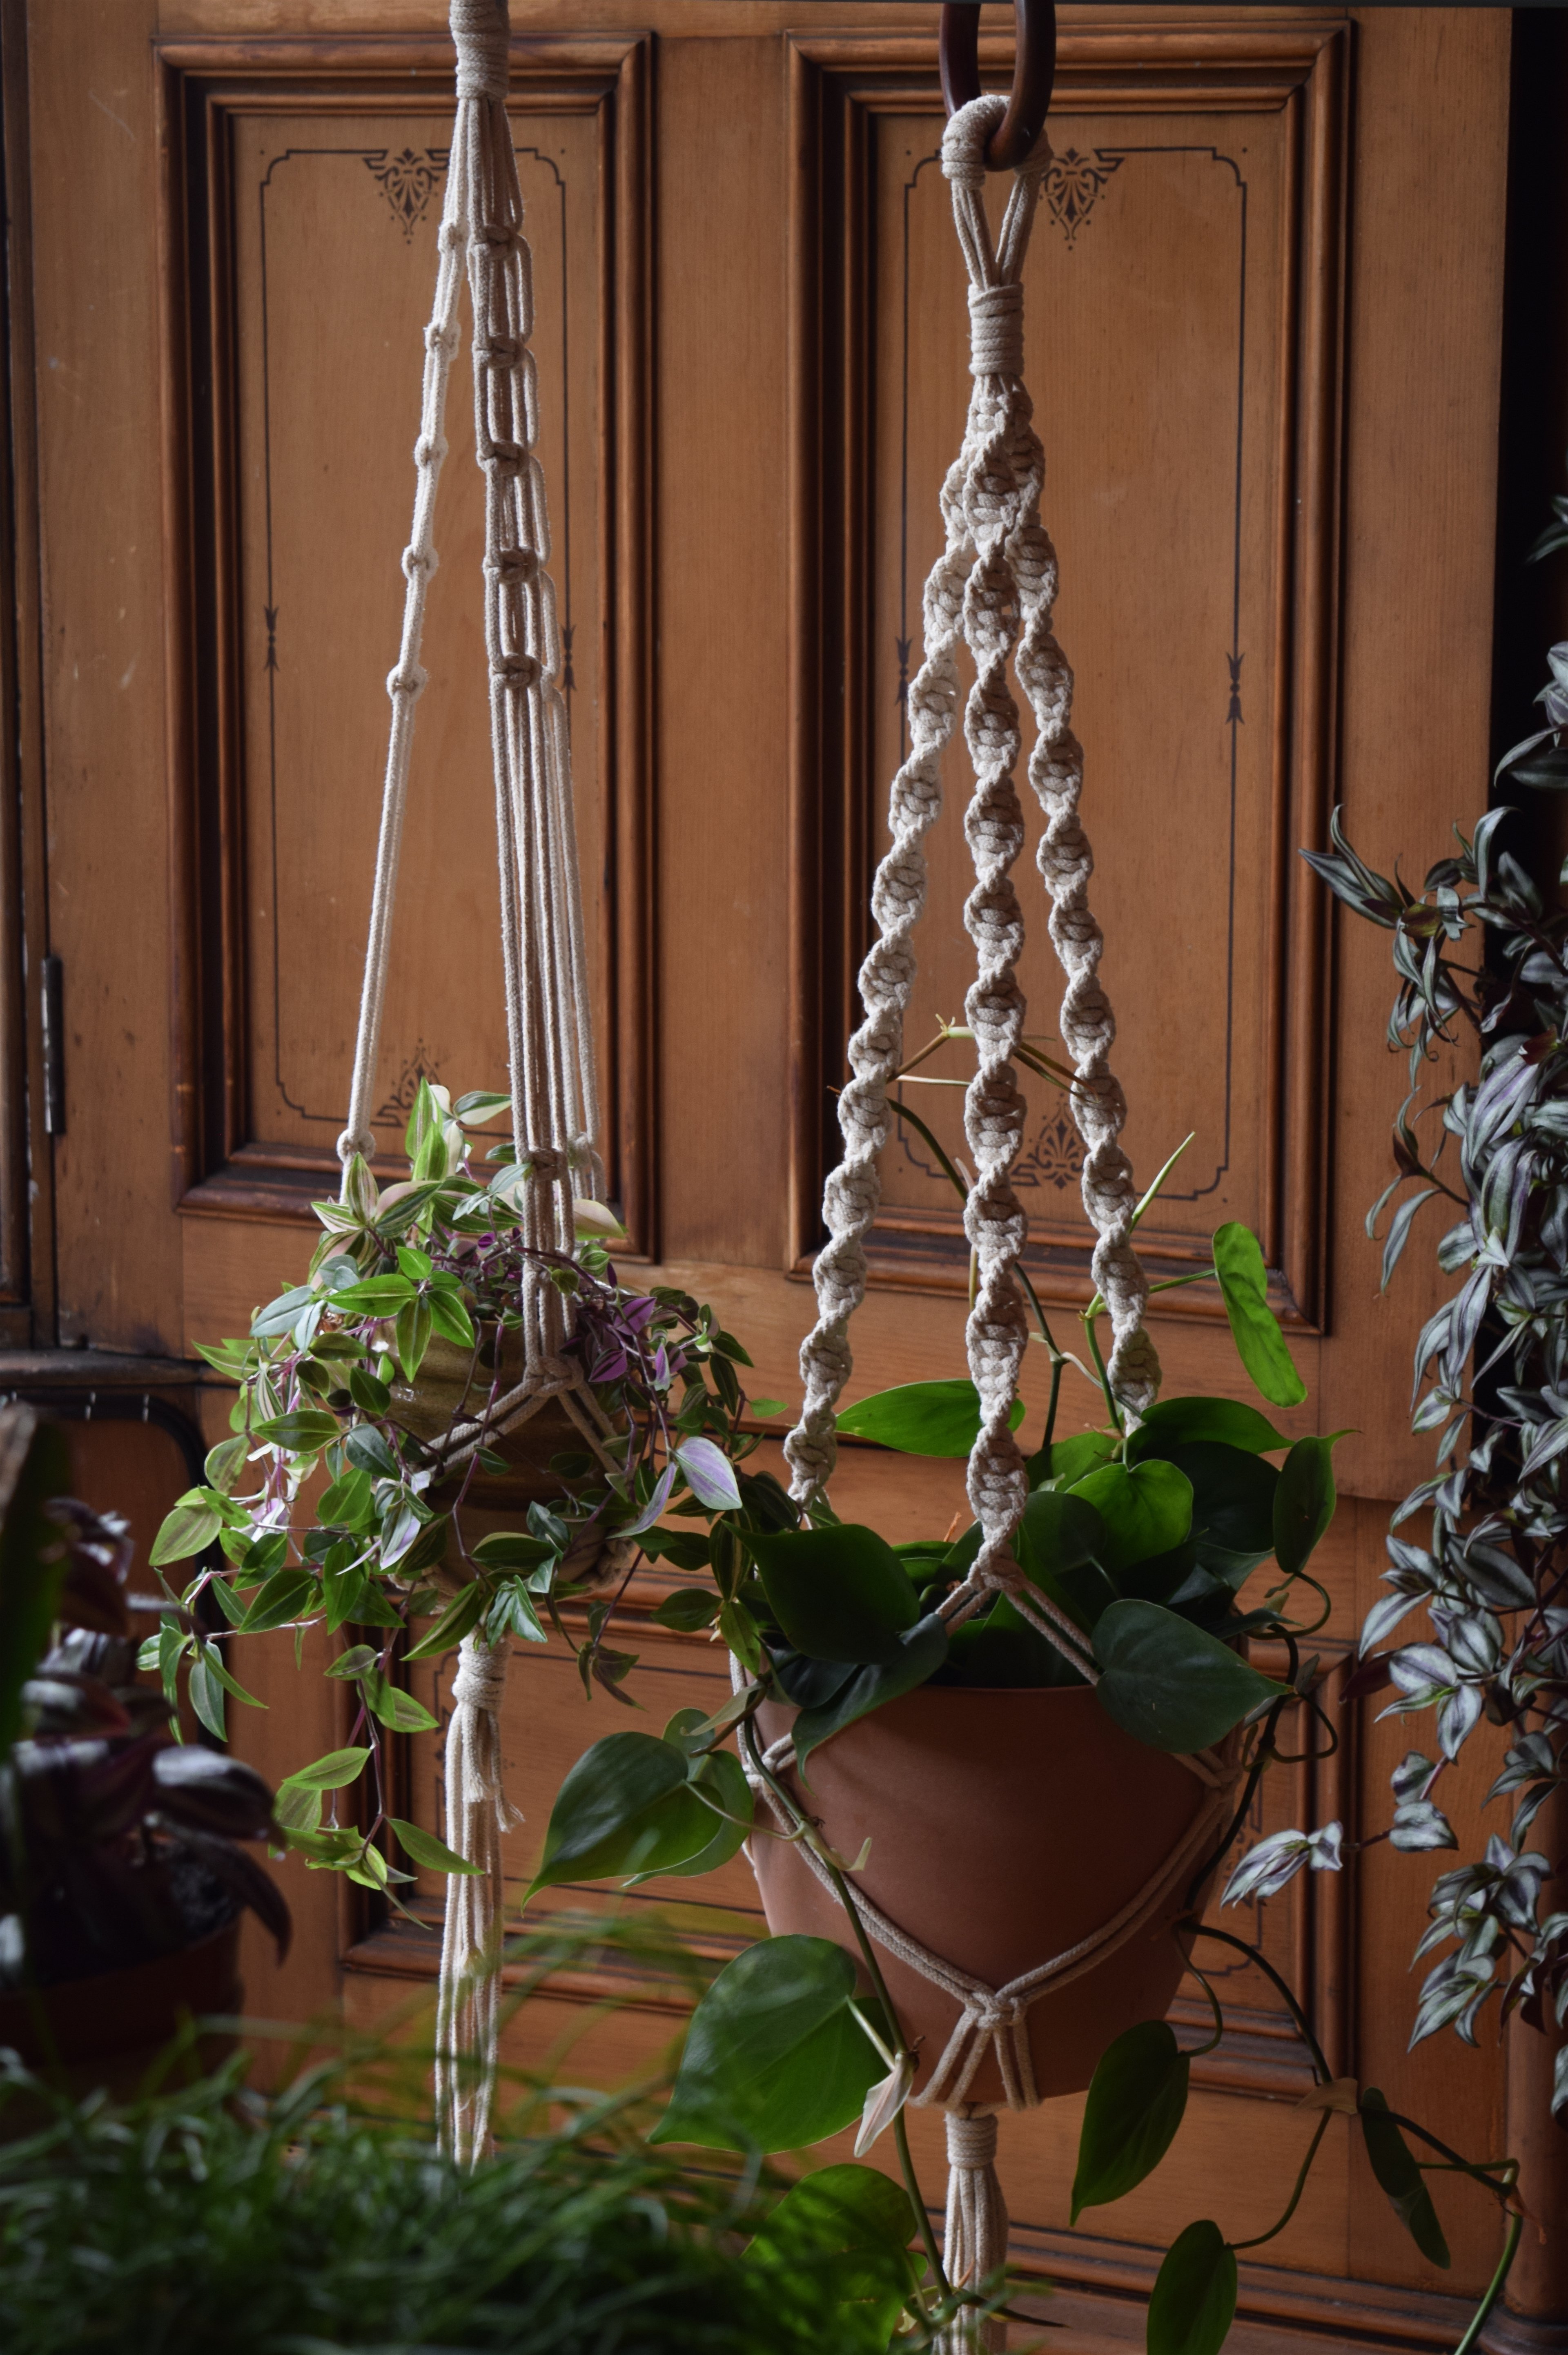 Make a macramé plant or pot hanger